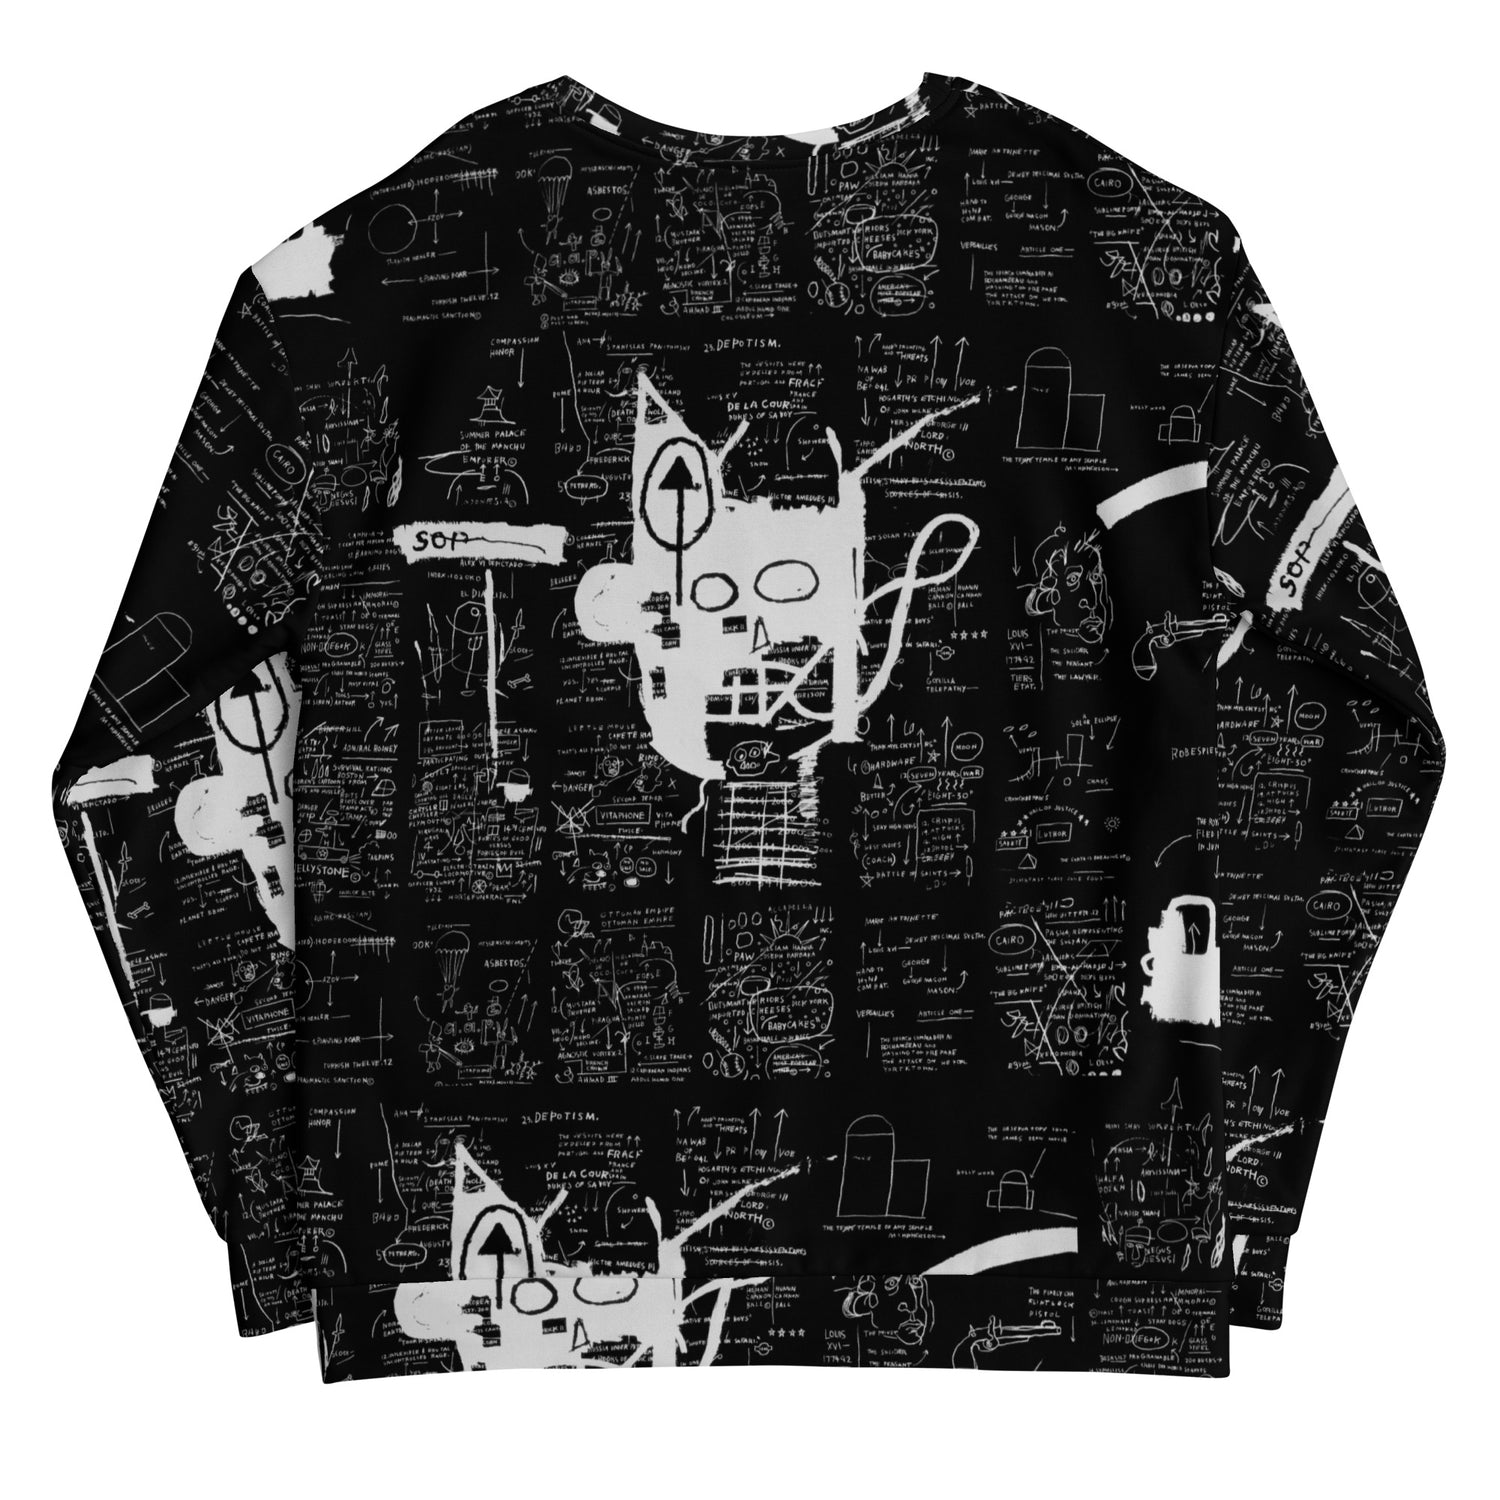 Jean-Michel Basquiat "Untitled" Artwork Printed Premium Streetwear Crewneck Sweatshirt